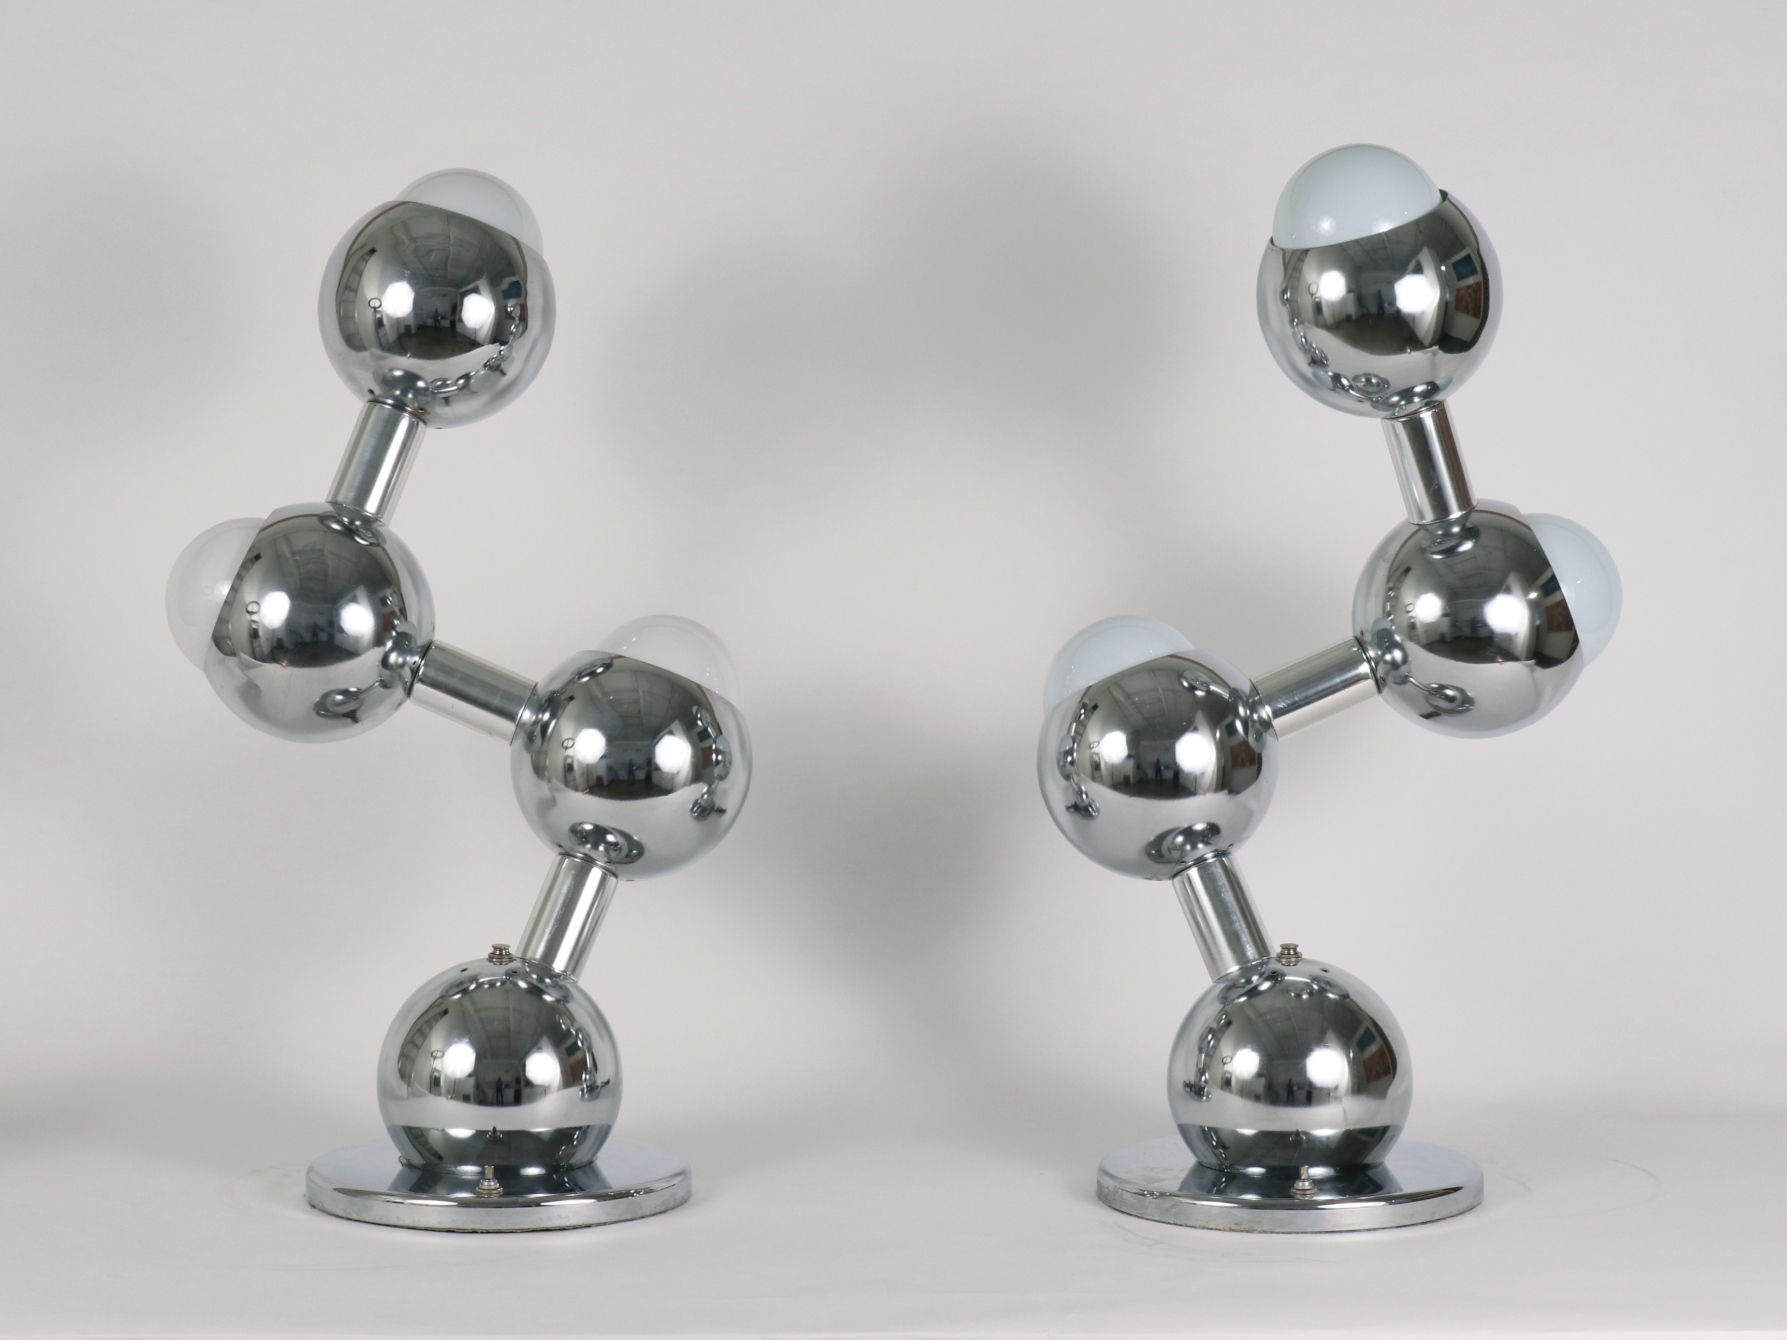 Pair of Chrome "Molecule" Lamps, c. 1970